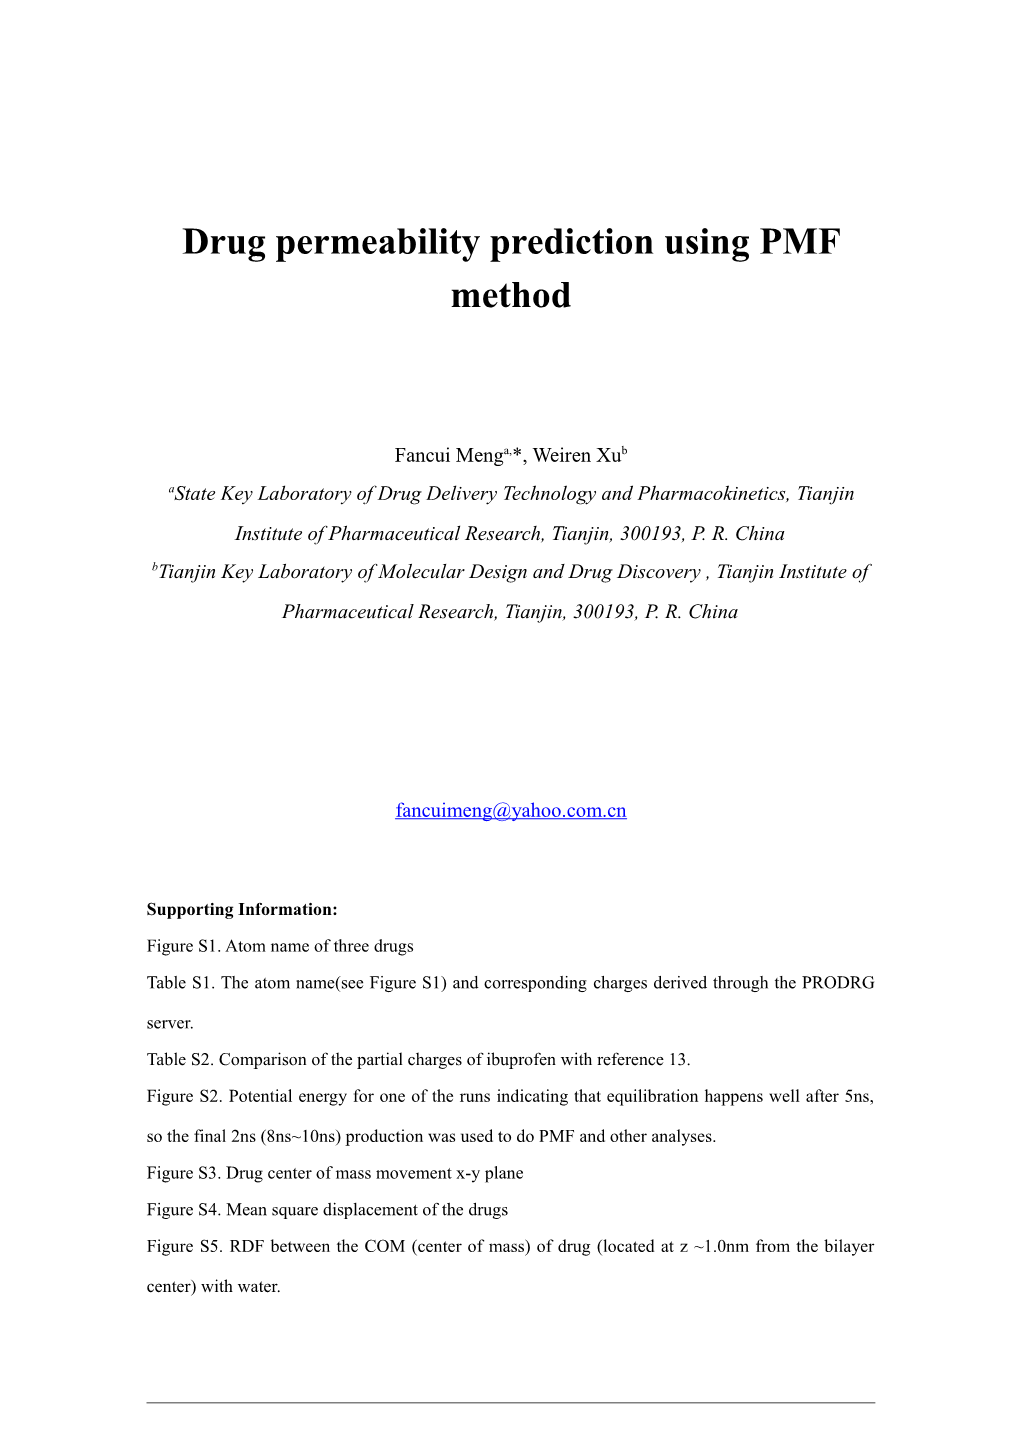 Drug Permeability Prediction Using PMF Method